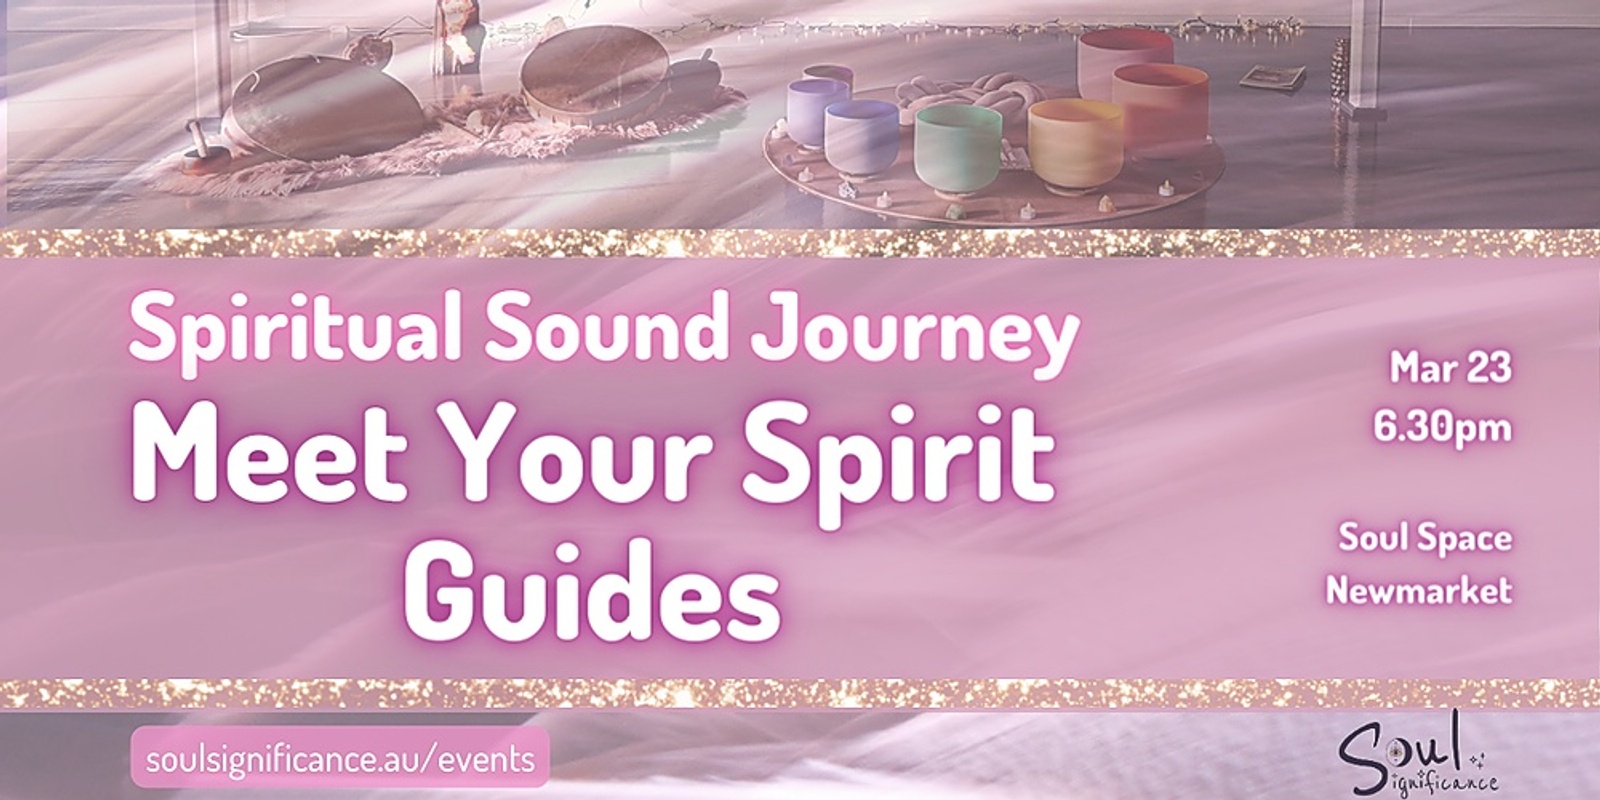 A Spiritual Sound Journey - Meet Your Spirit Guides